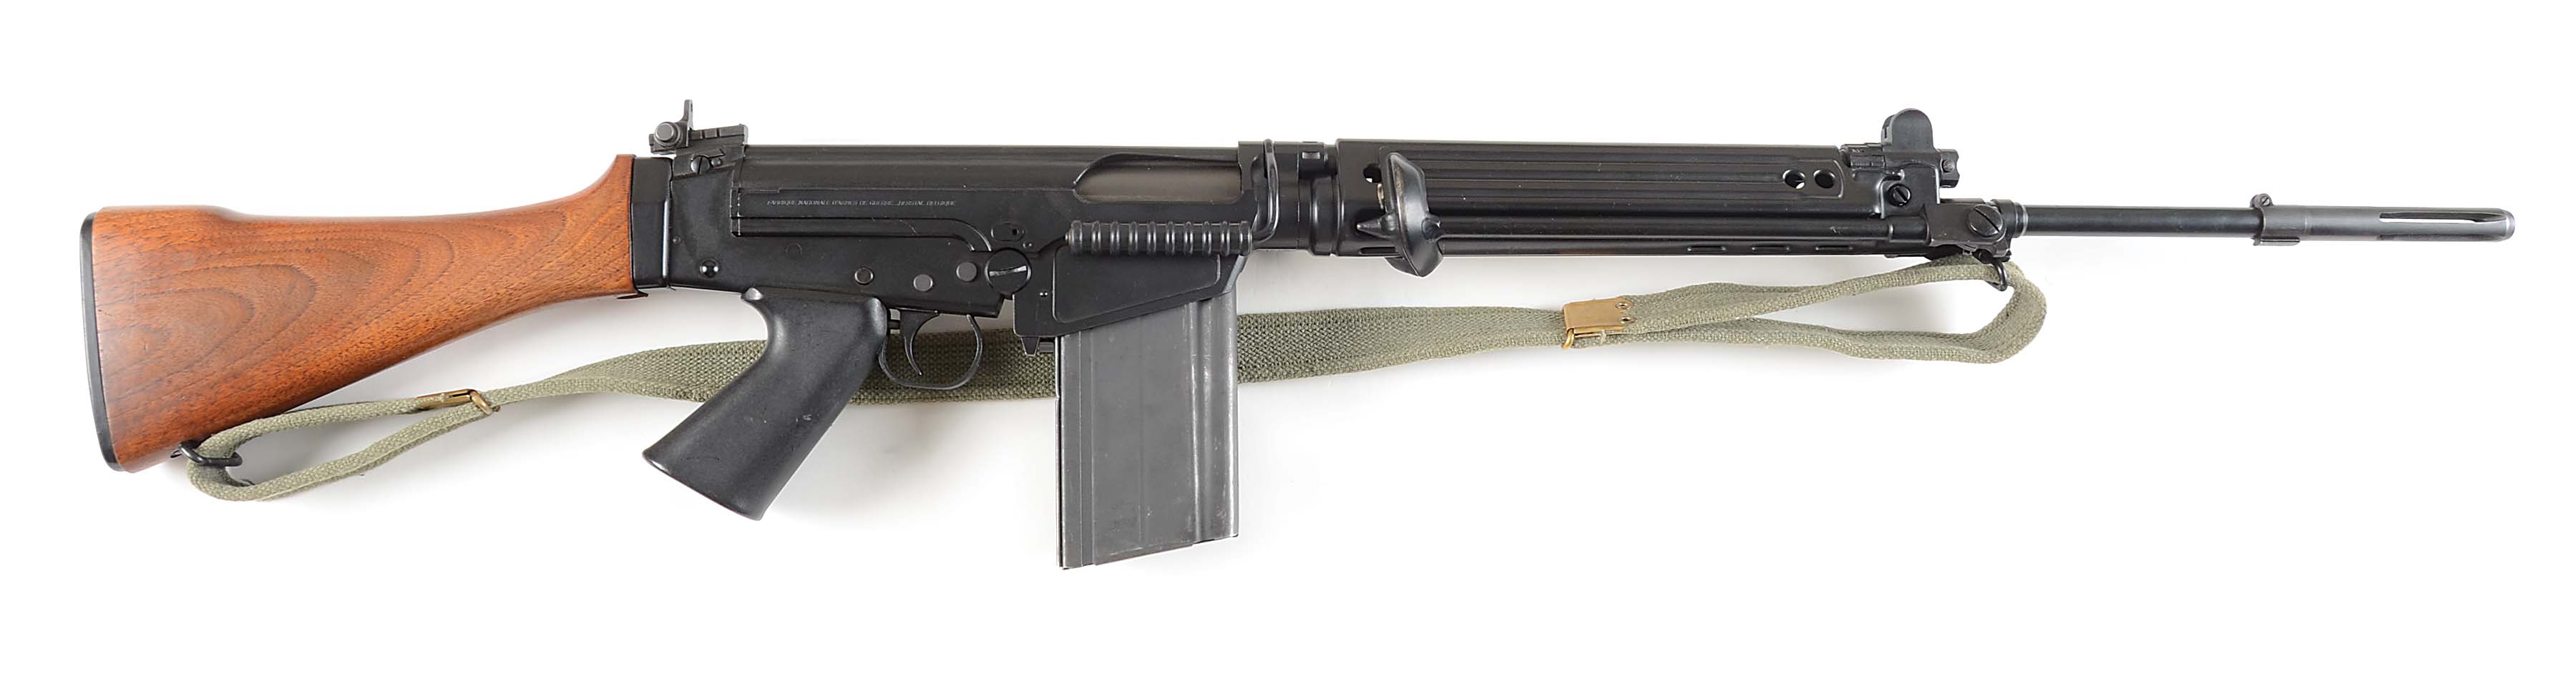 (C) always desirable FN fal g series semi-automatic rifle. 